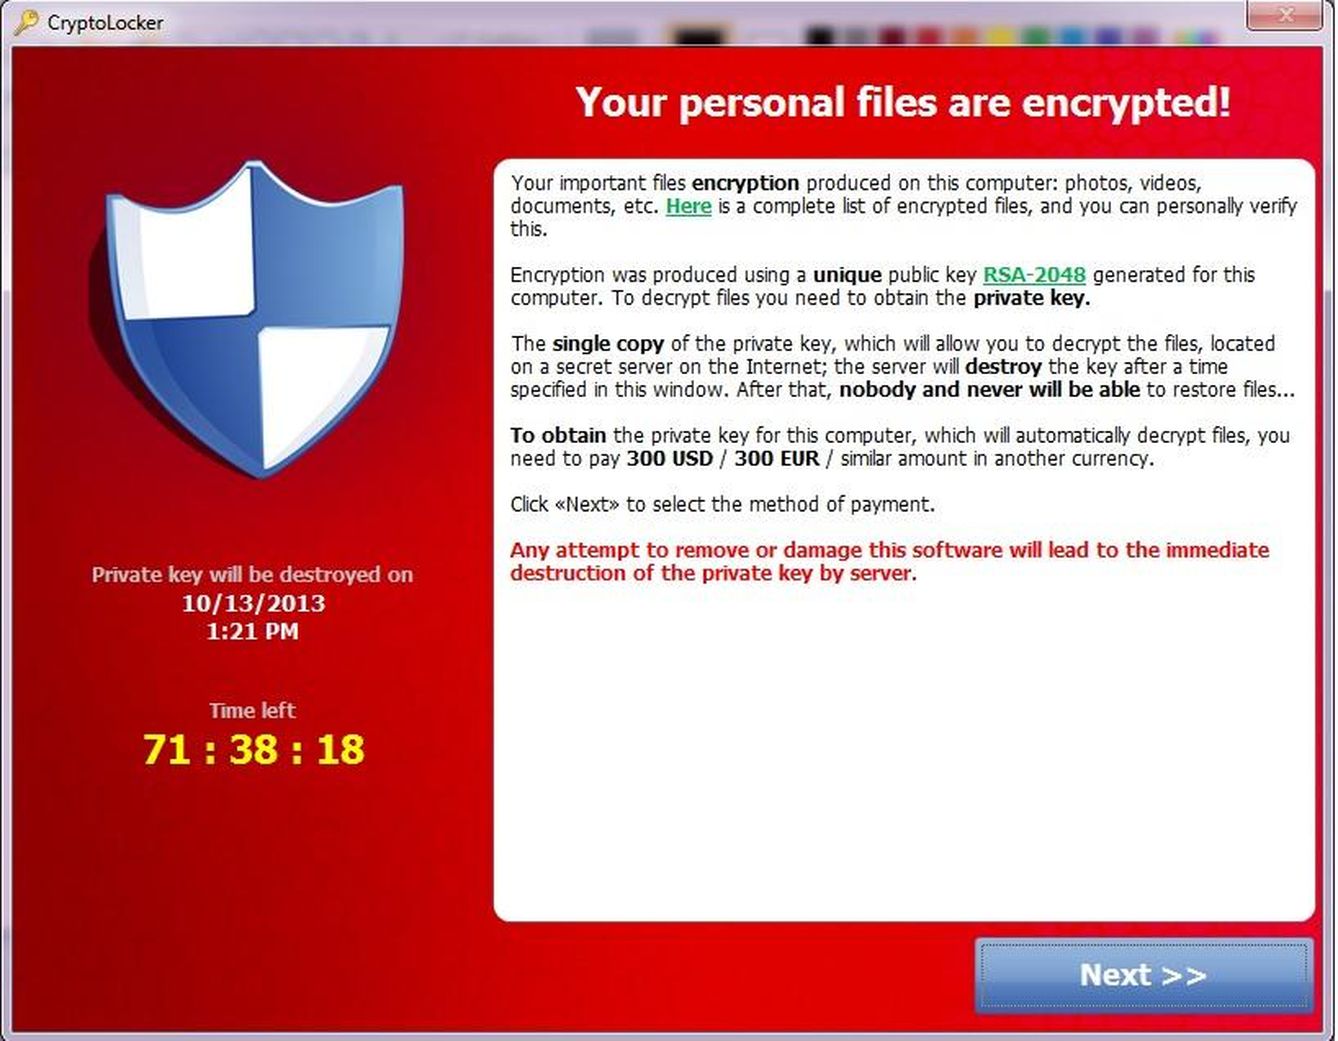 Ejemplo de llamado 'ransomware' llamado CryptoLocker.